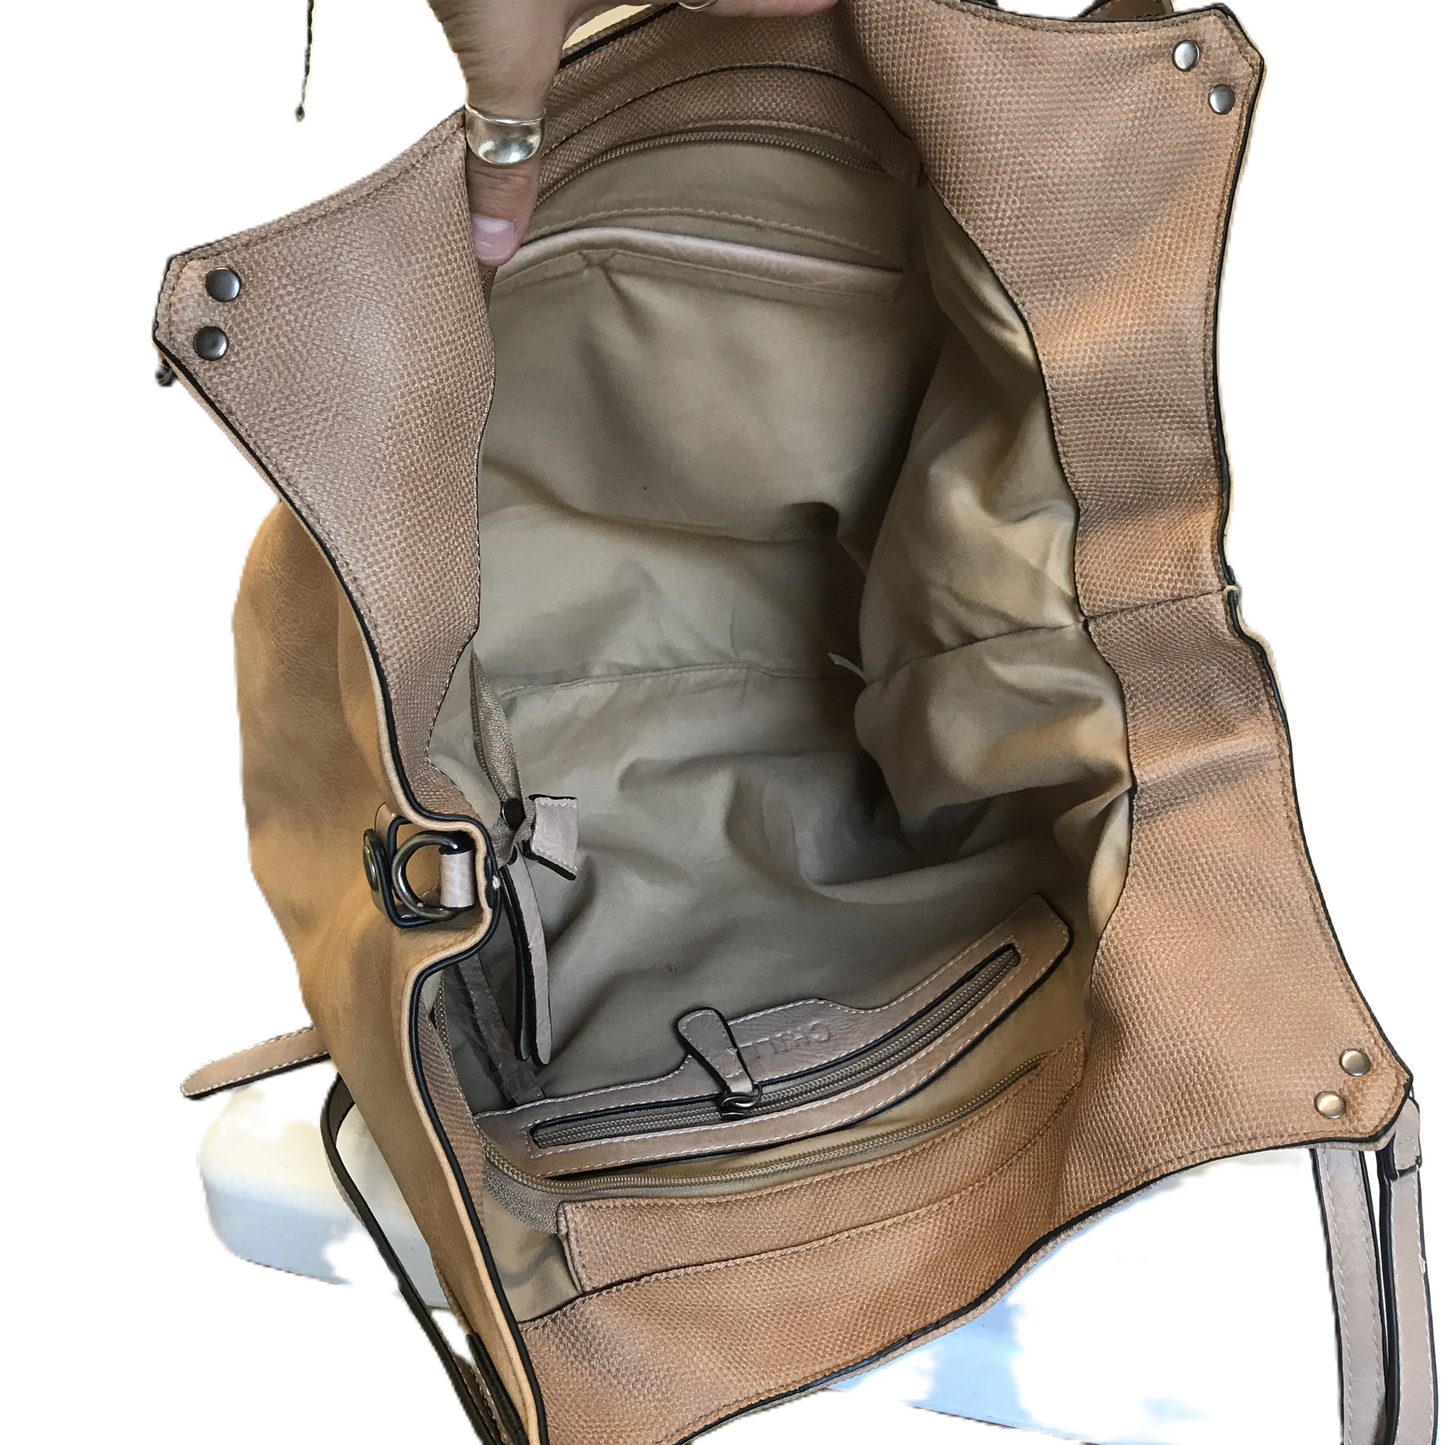 Handbag By Chilix, Size: Large